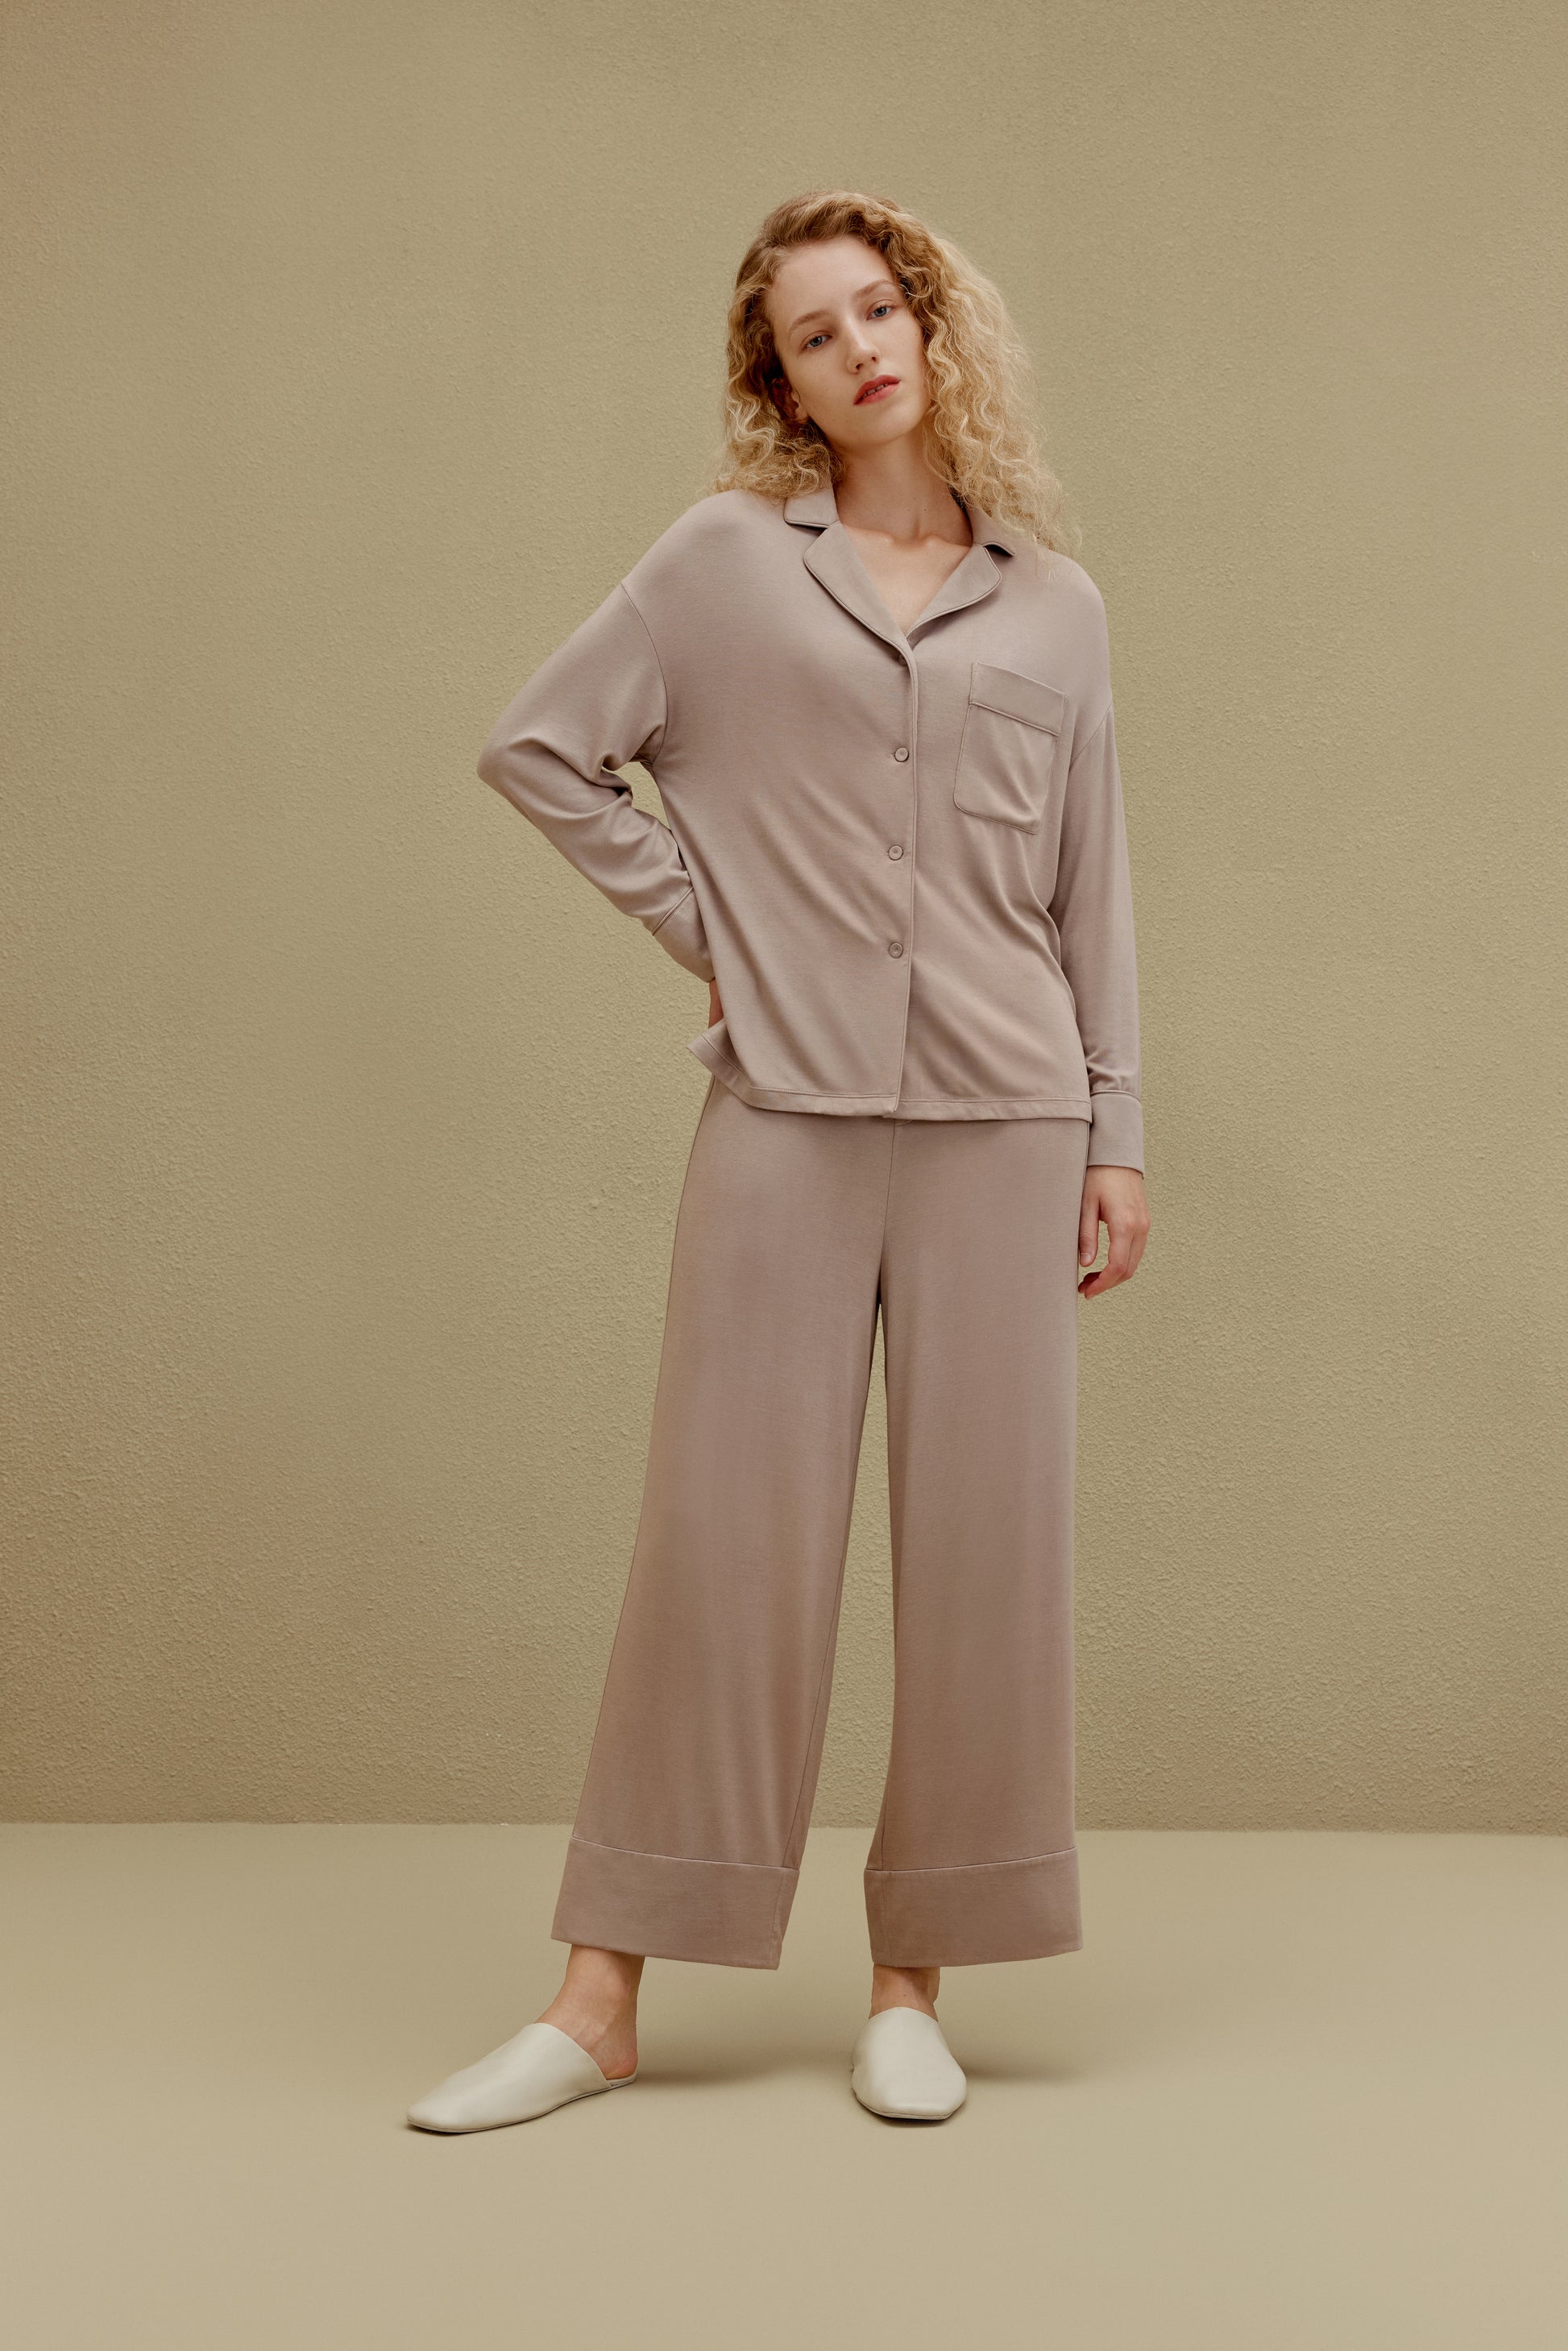 Woman wearing tan button up pajama shirt with pocket and matching pajama pants